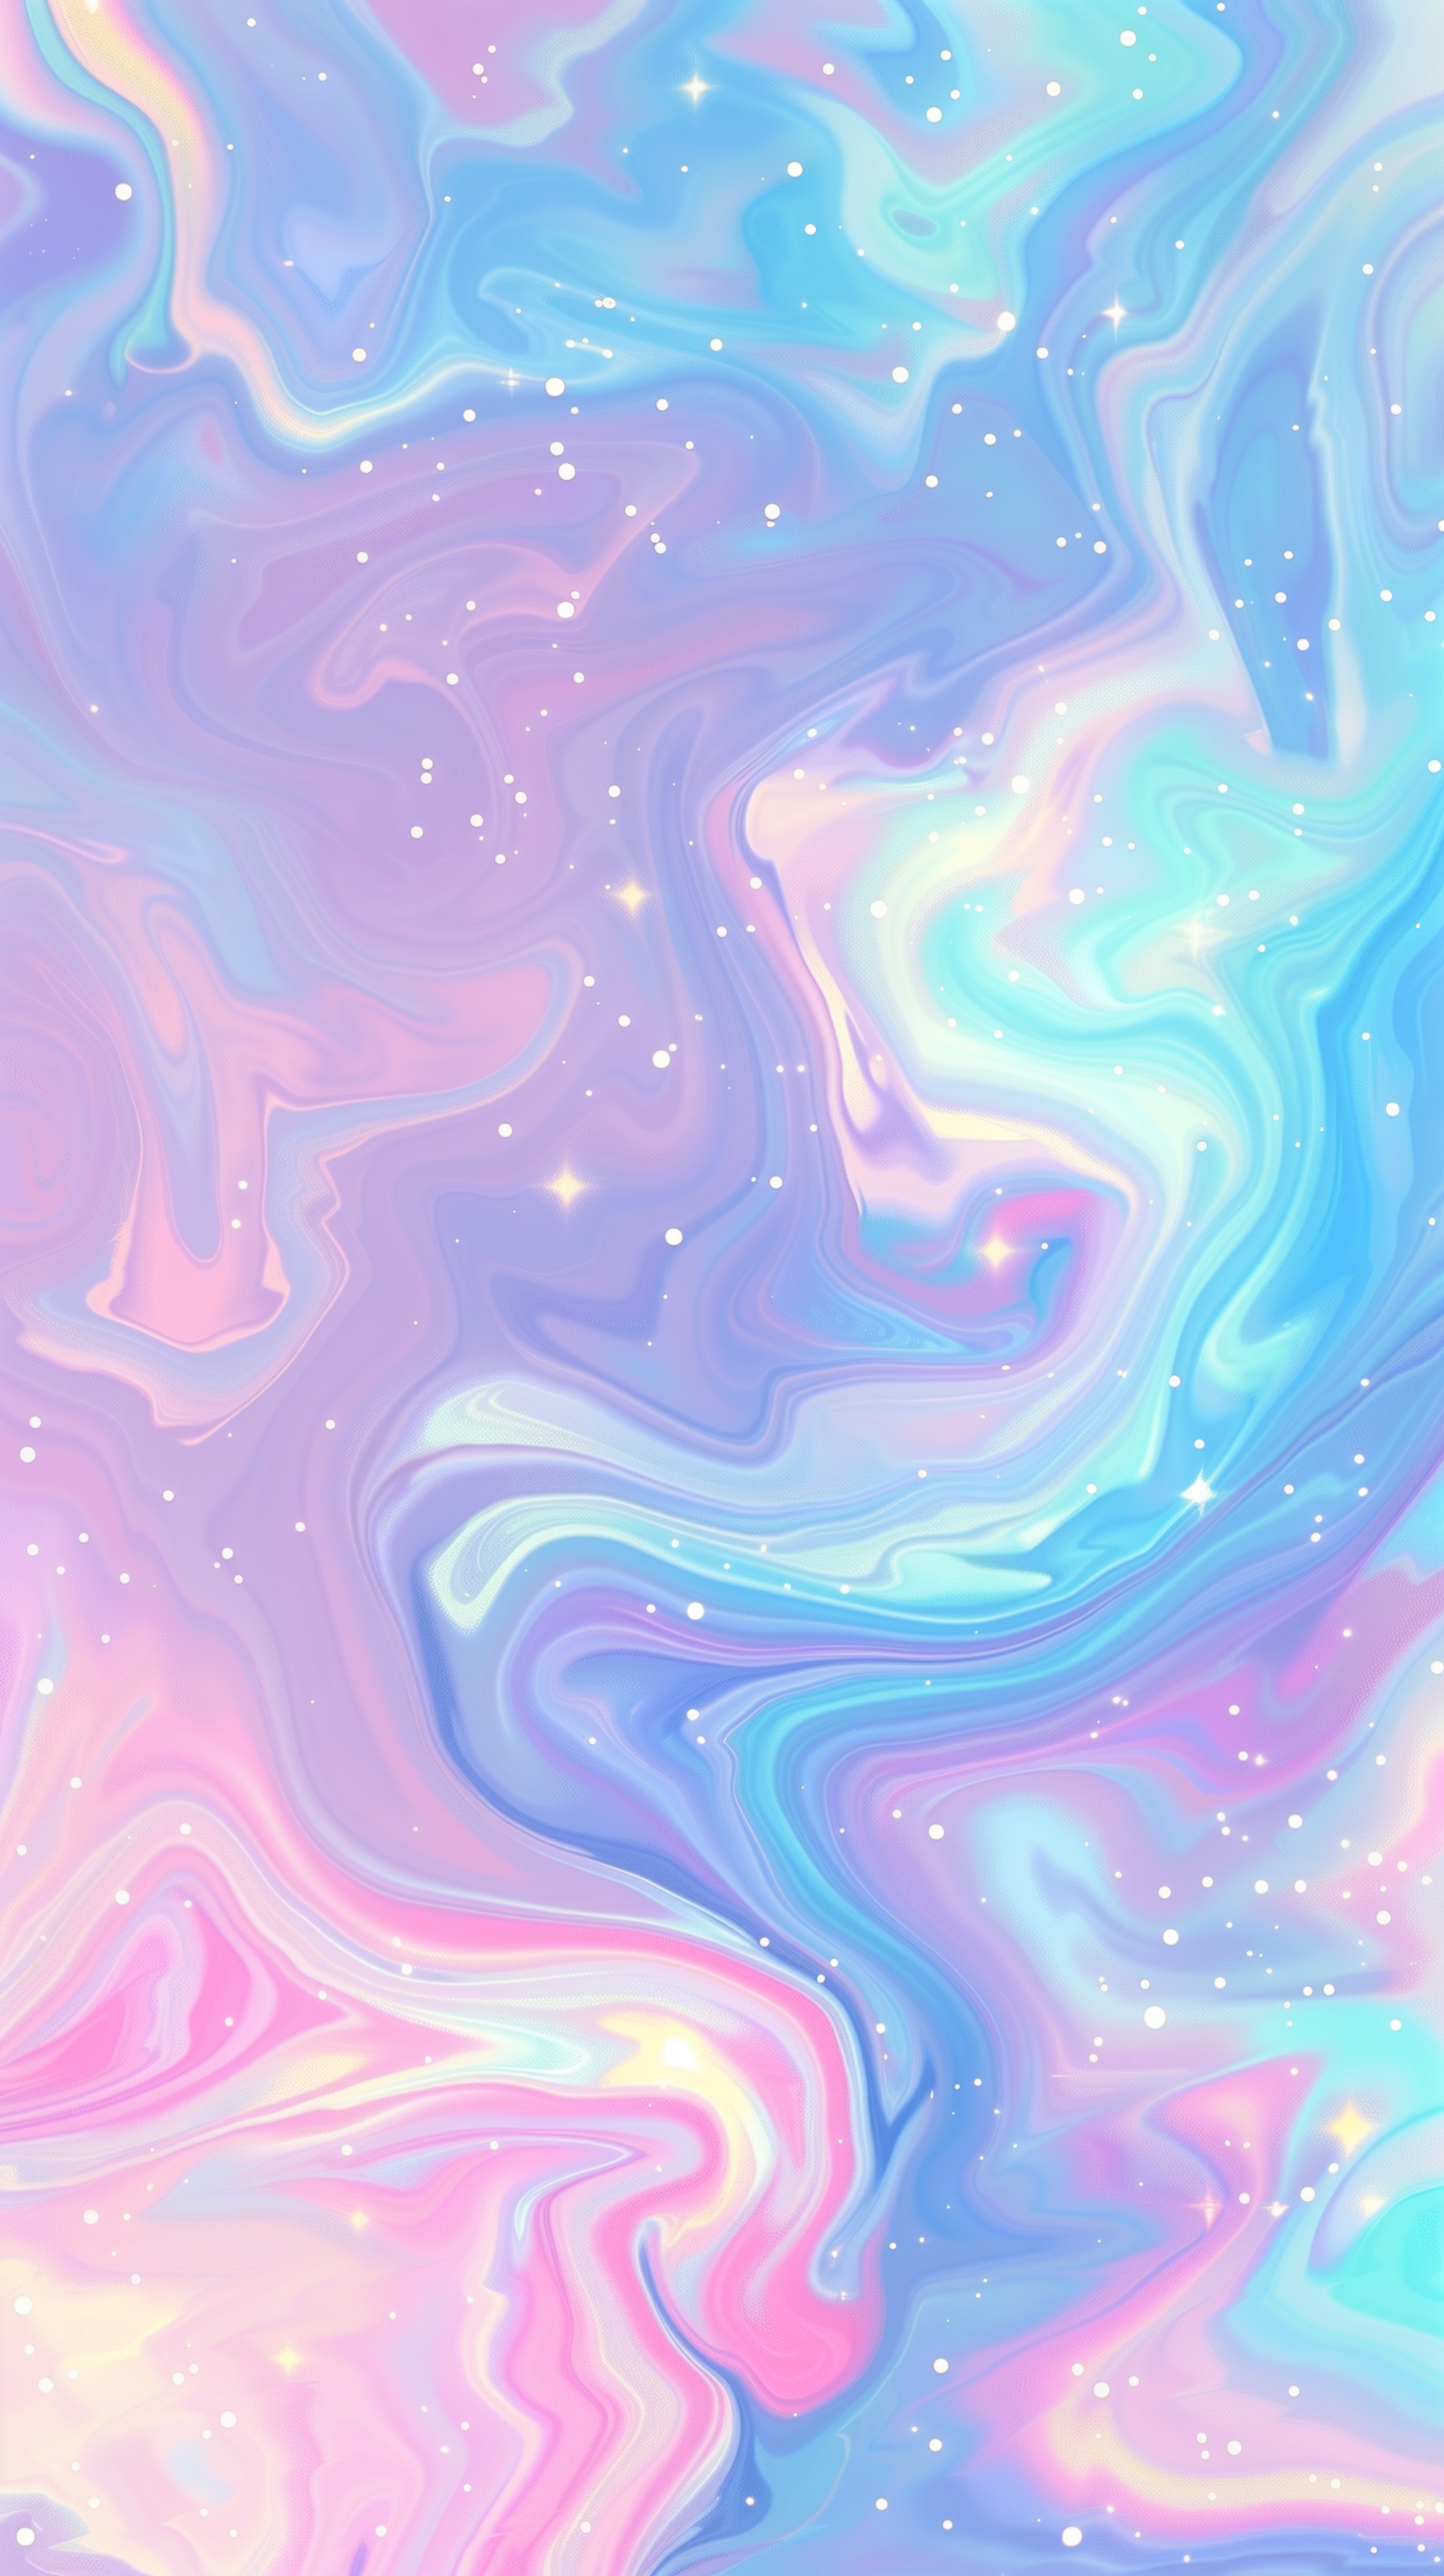 Colorful Swirls of Pink and Blue Hintergrund[68dfb80c26194abb9aca]